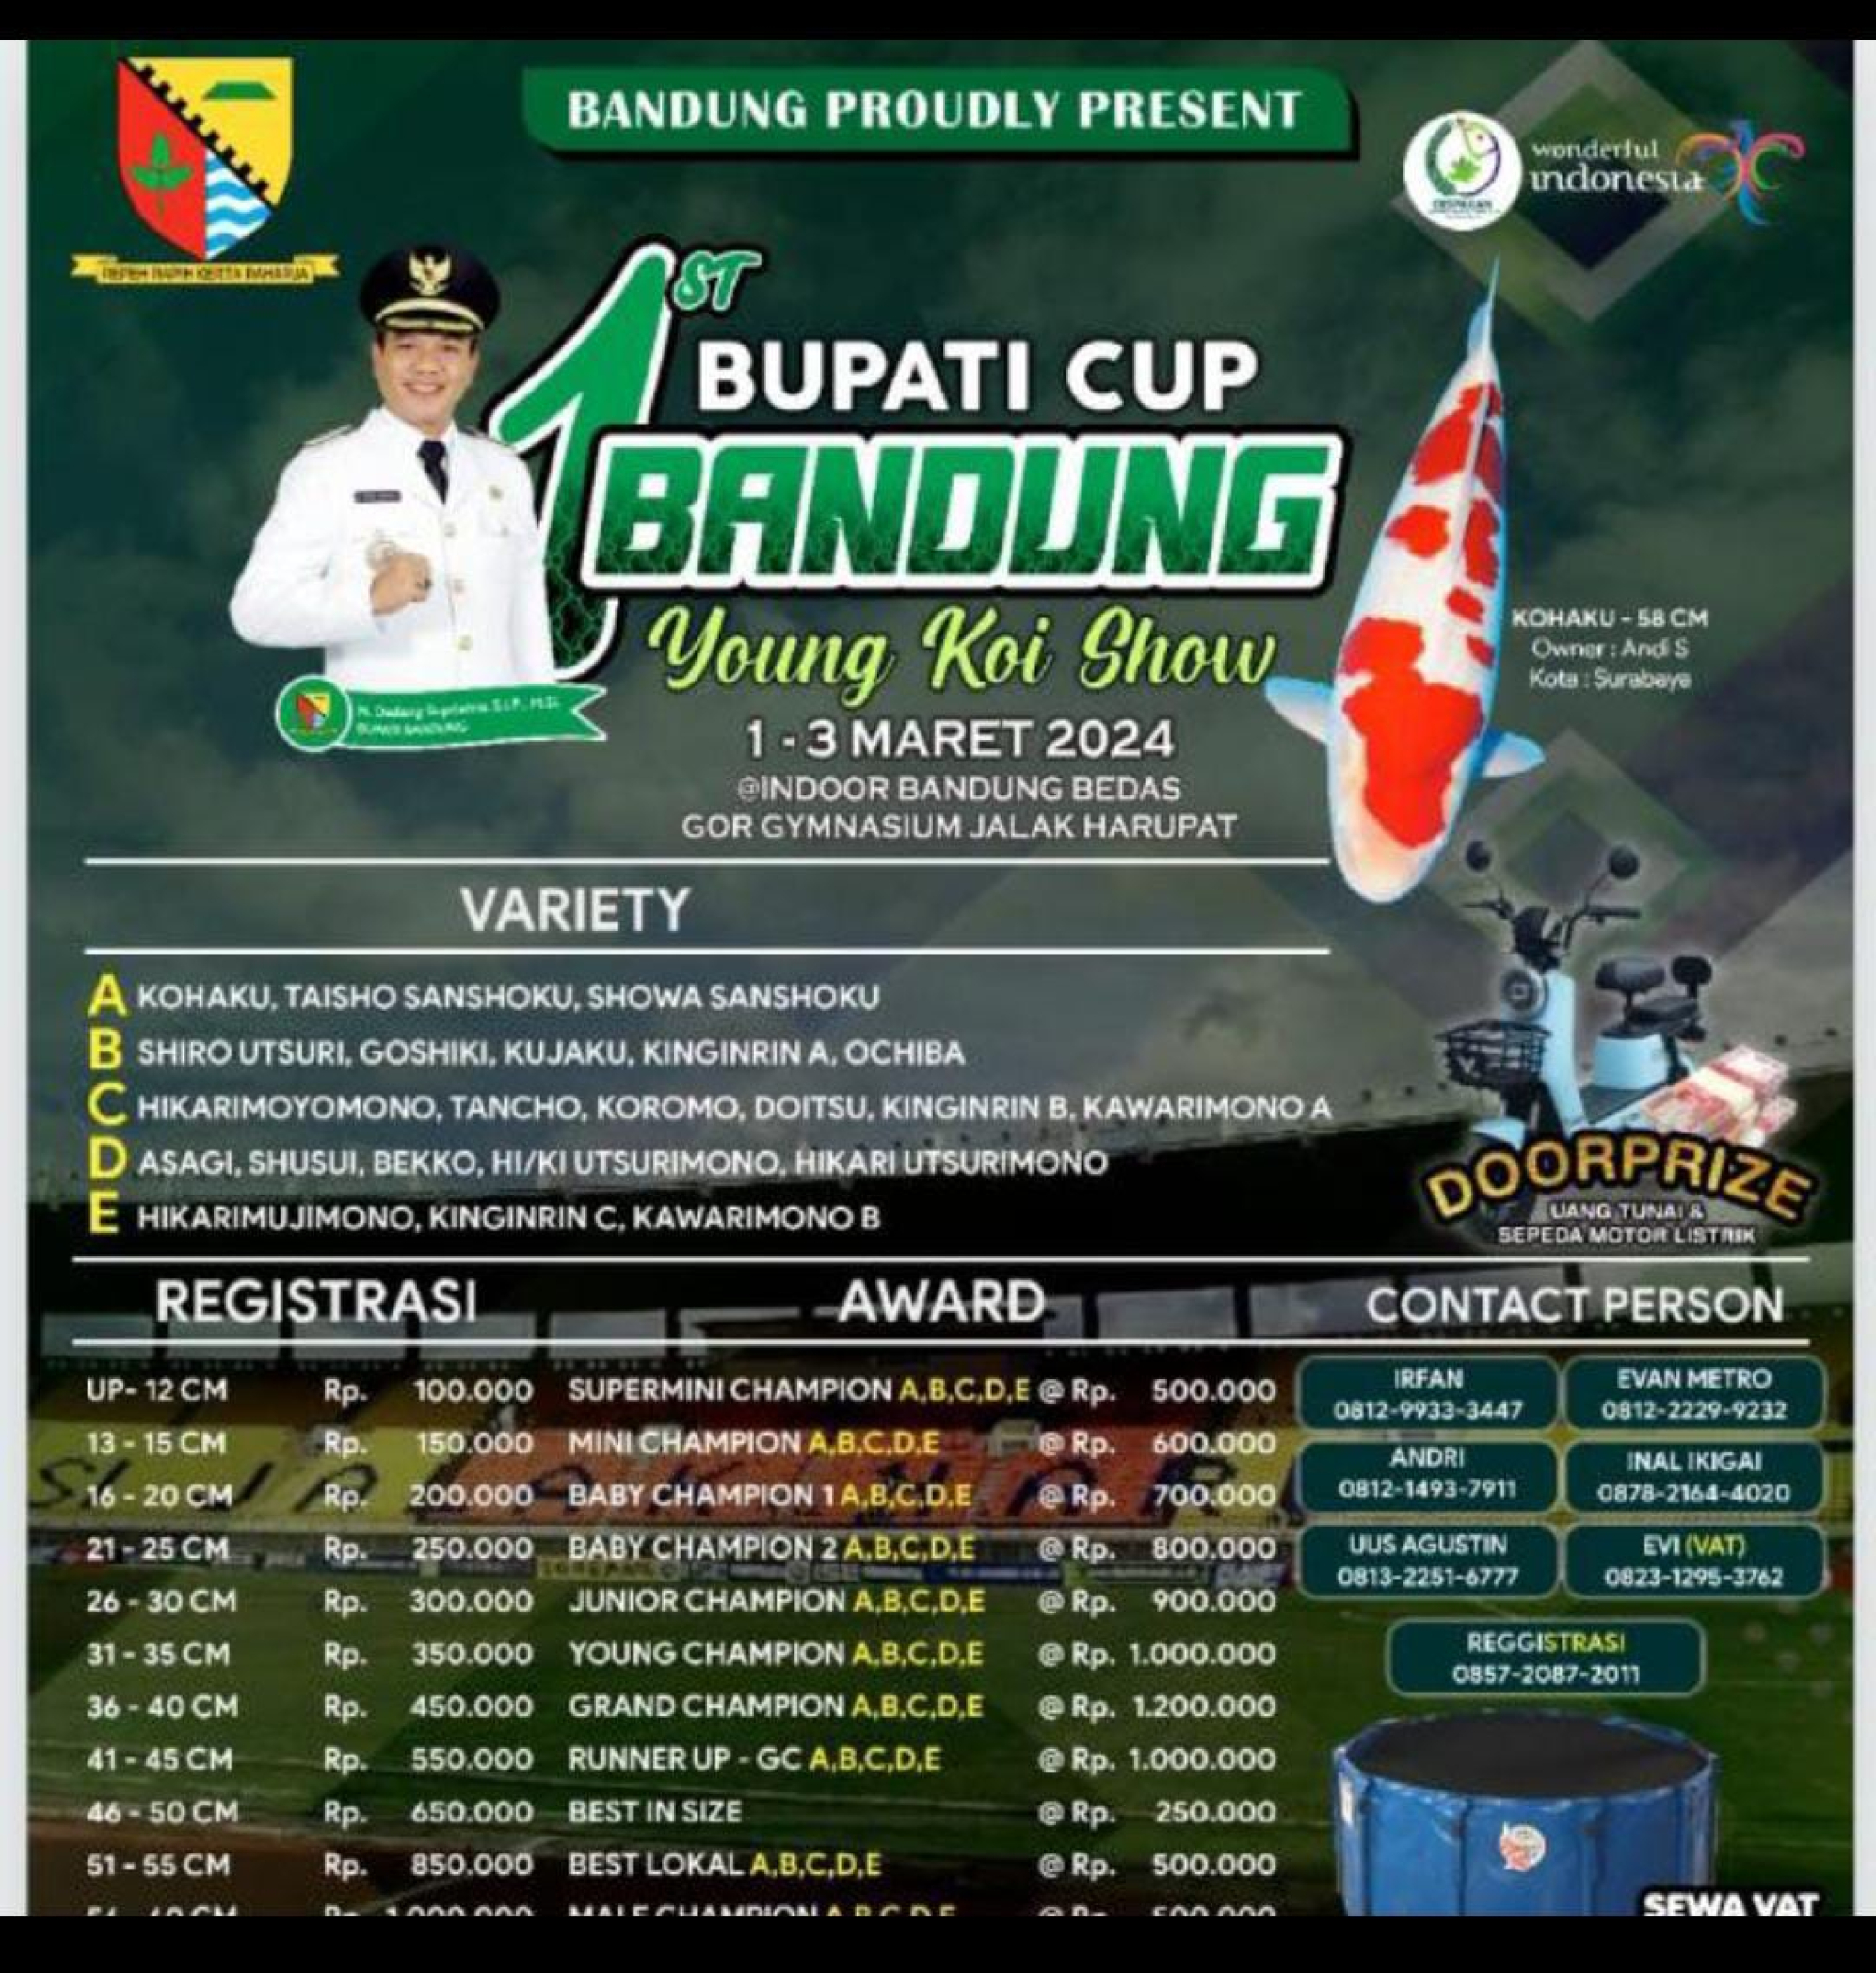 Bupati Cup Bandung